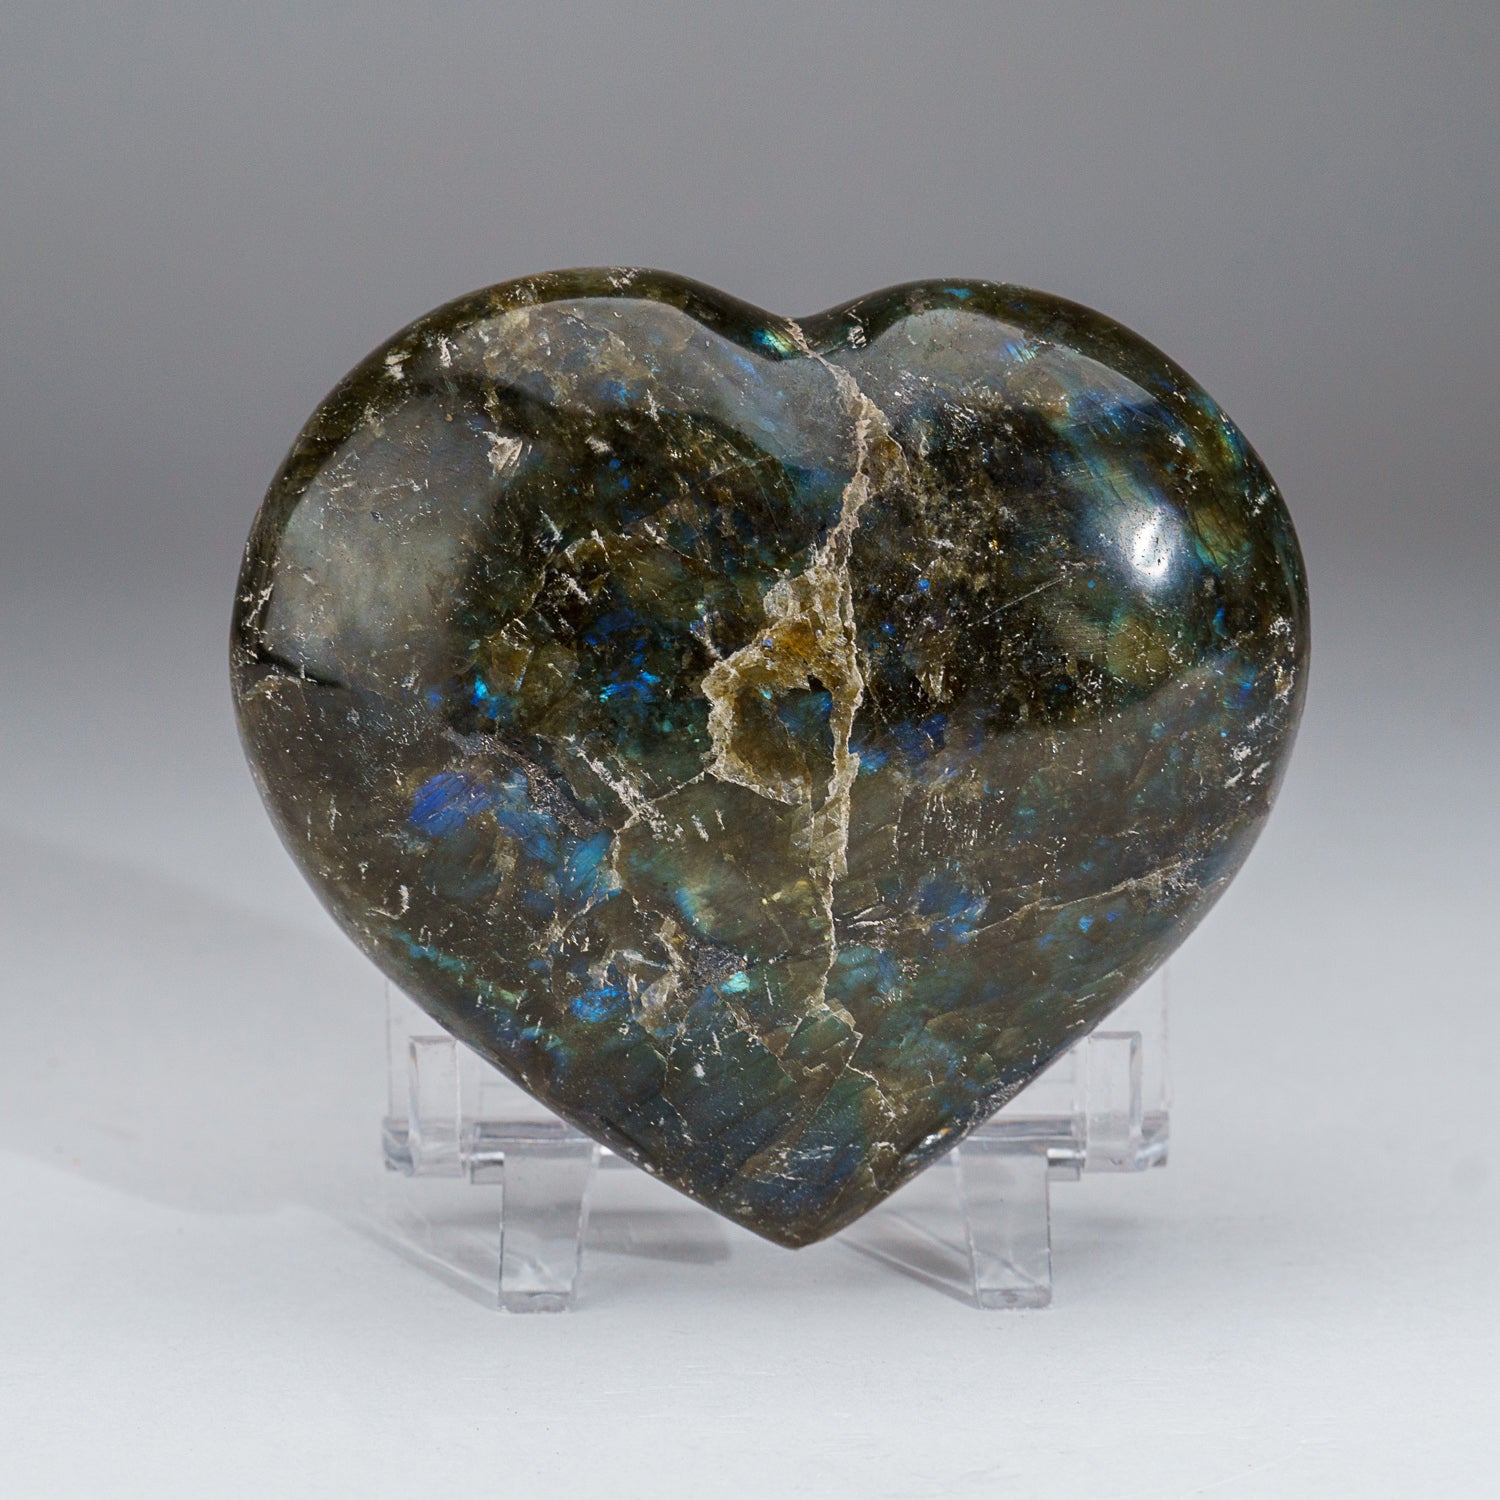 Genuine Polished Labradorite Heart (1.2 lbs)